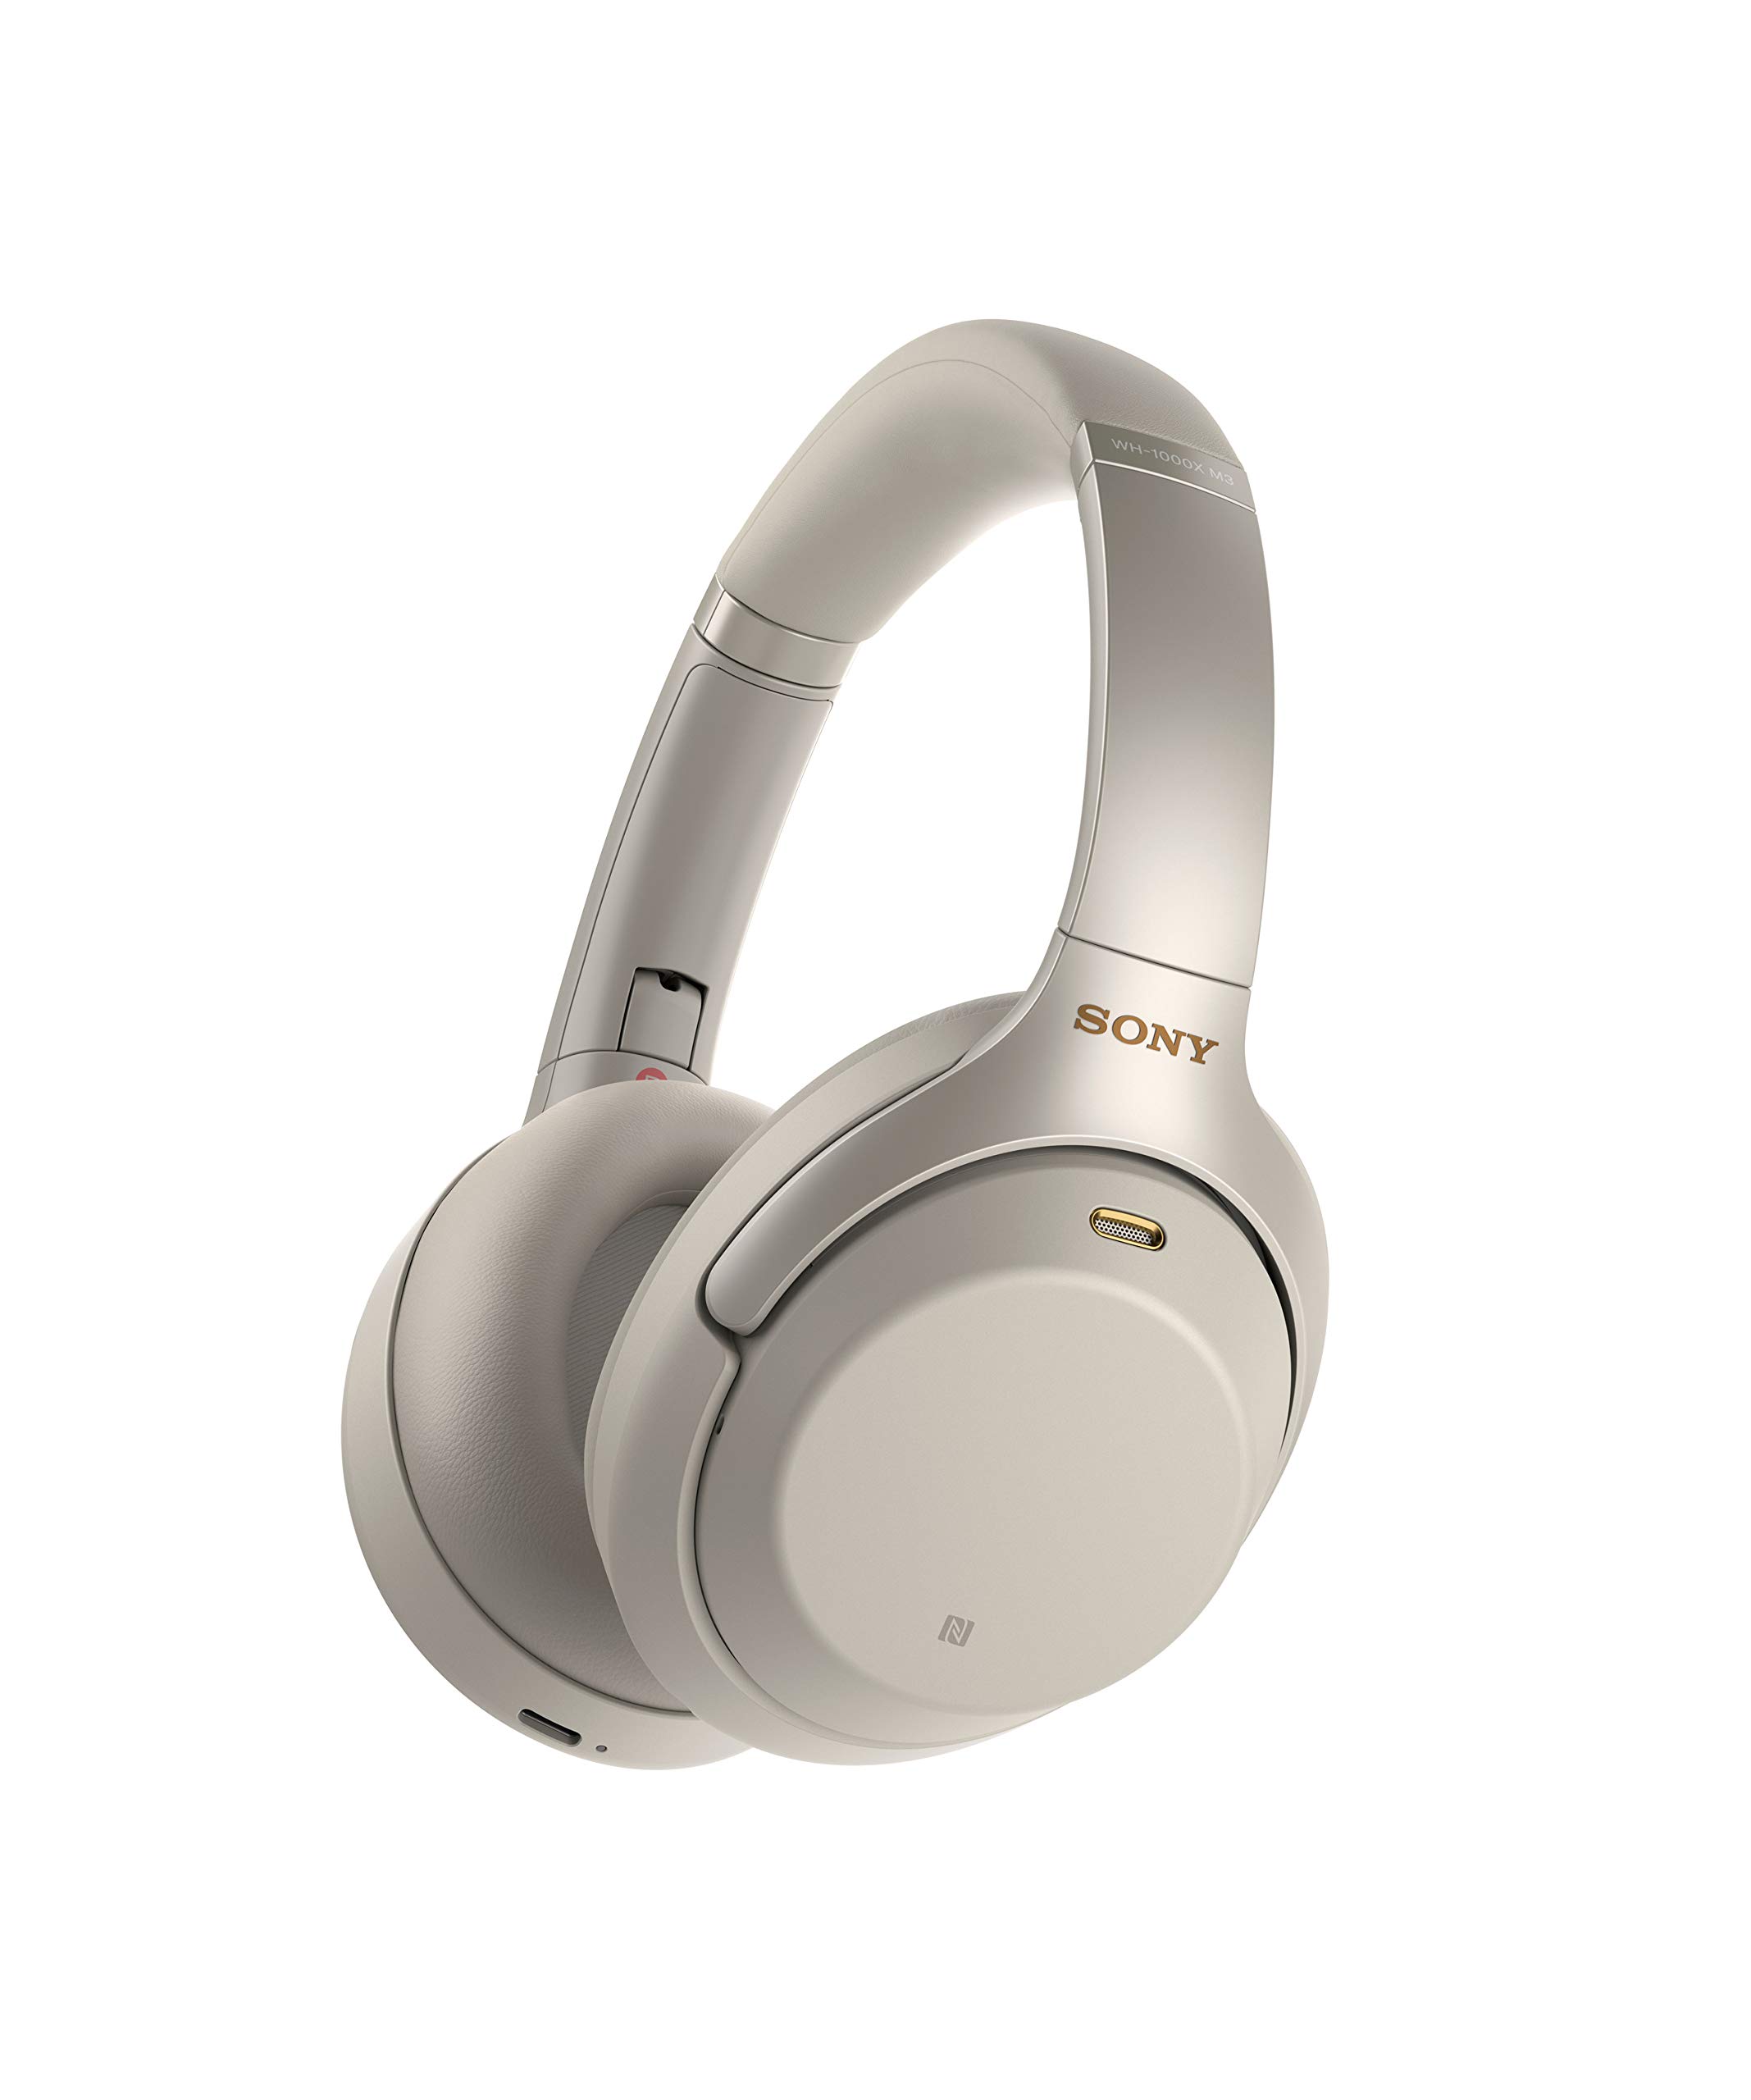 Sony WH-1000XM3 سماعة رأس ستريو لاسلكية لإلغاء الضوضاء (إصدار دولي / مذكرة البائع) (فضية)